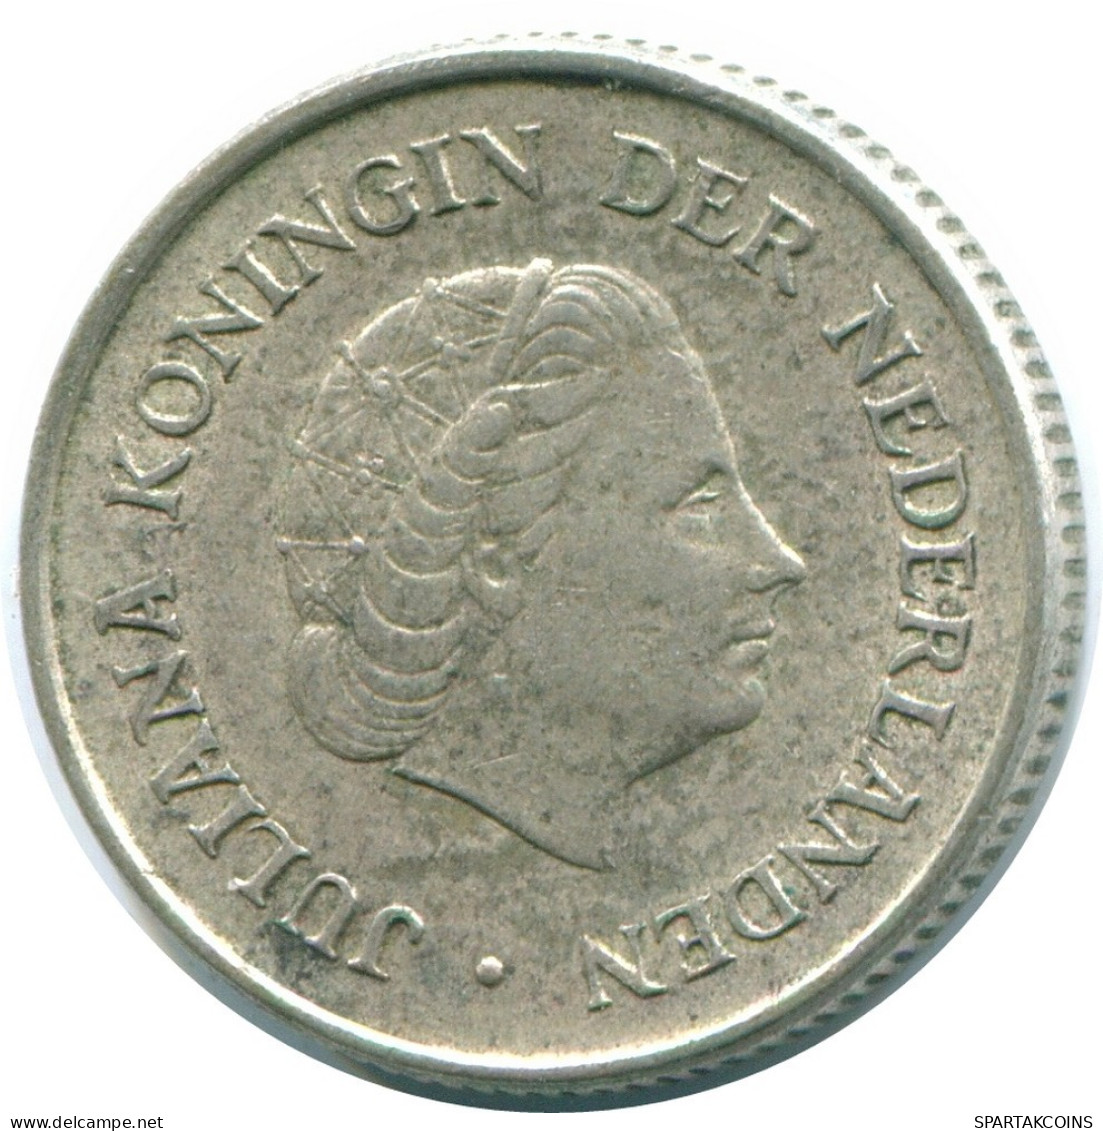 1/4 GULDEN 1970 NETHERLANDS ANTILLES SILVER Colonial Coin #NL11708.4.U.A - Netherlands Antilles